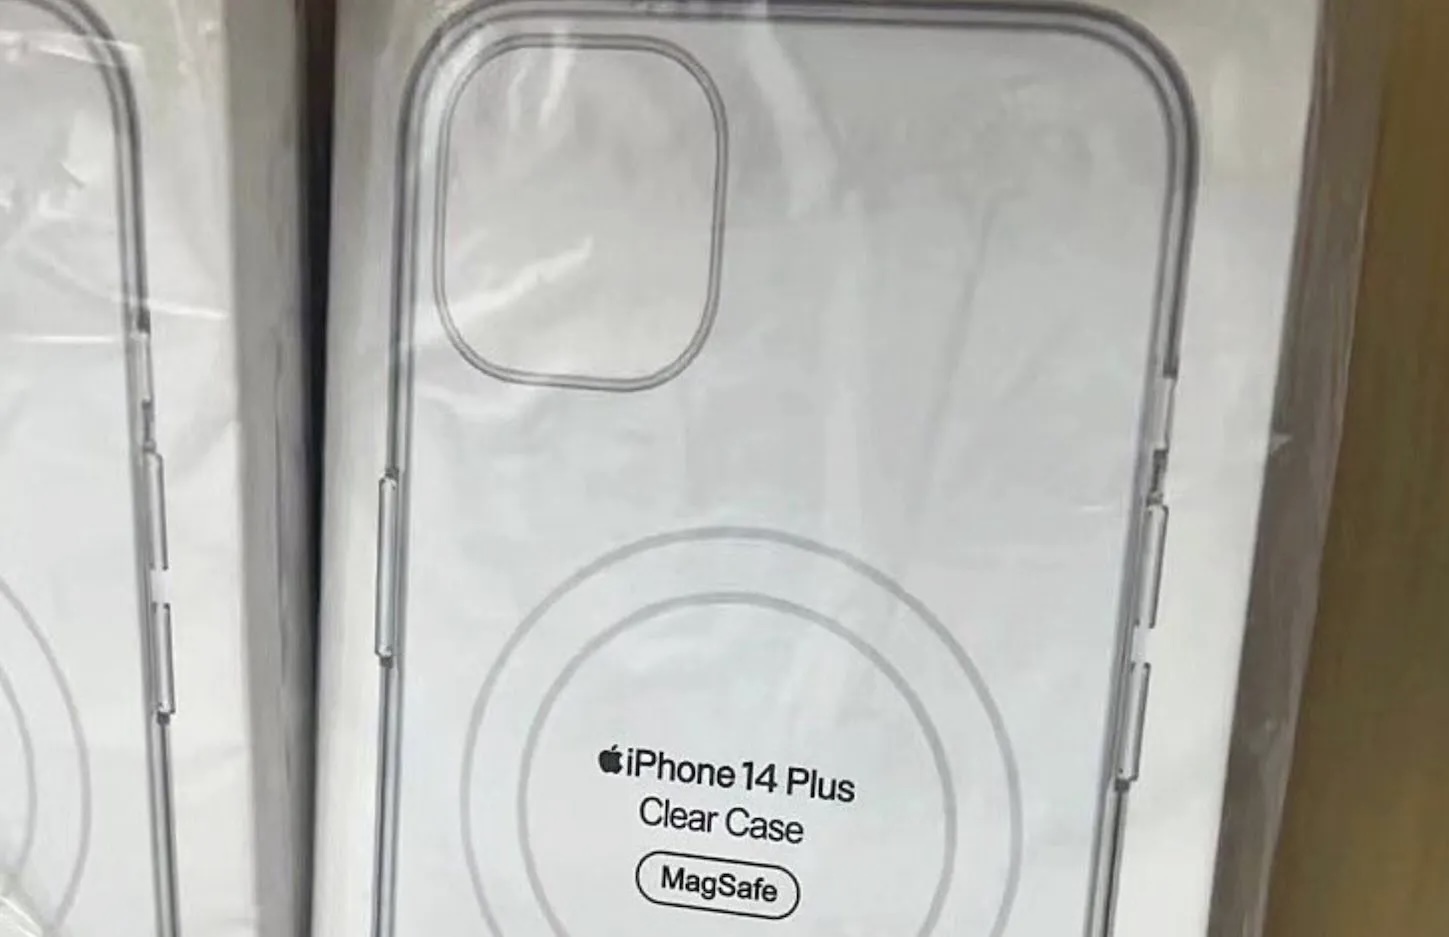 Название iPhone 14 Plus засветилось на фото с прозрачным чехлом